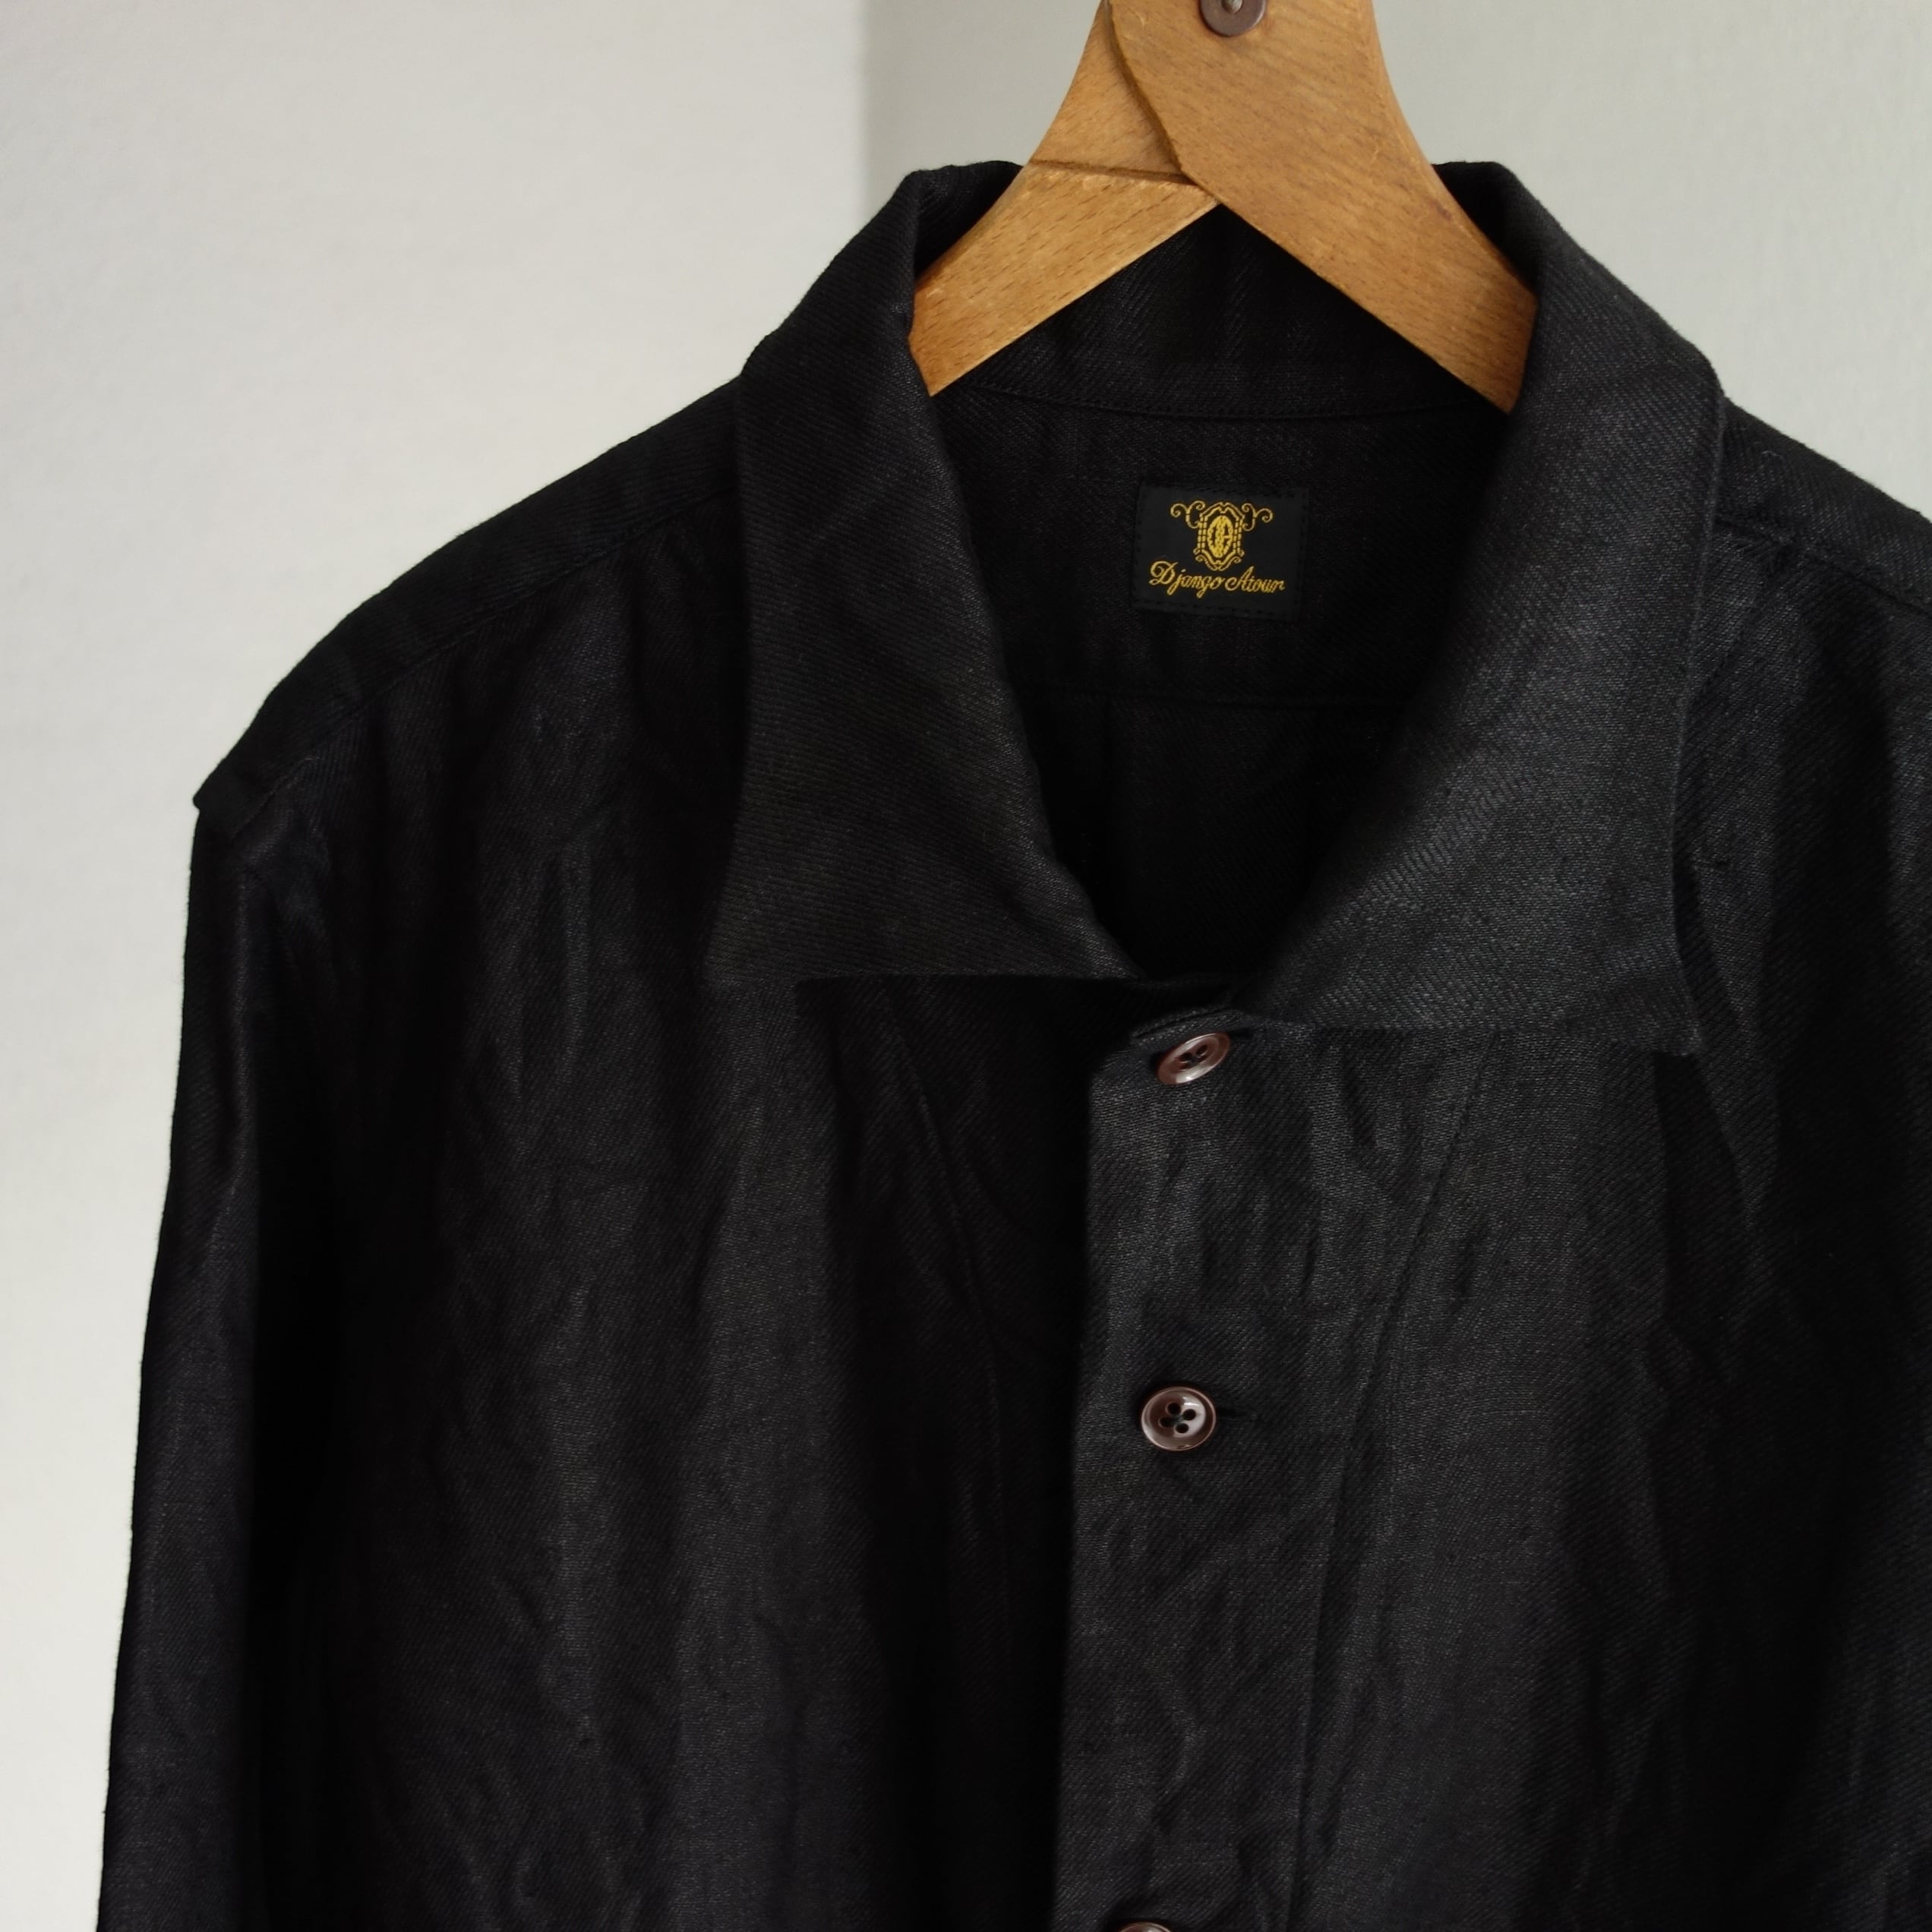 classic artisanal heavylinen shirt jacket / safilin black